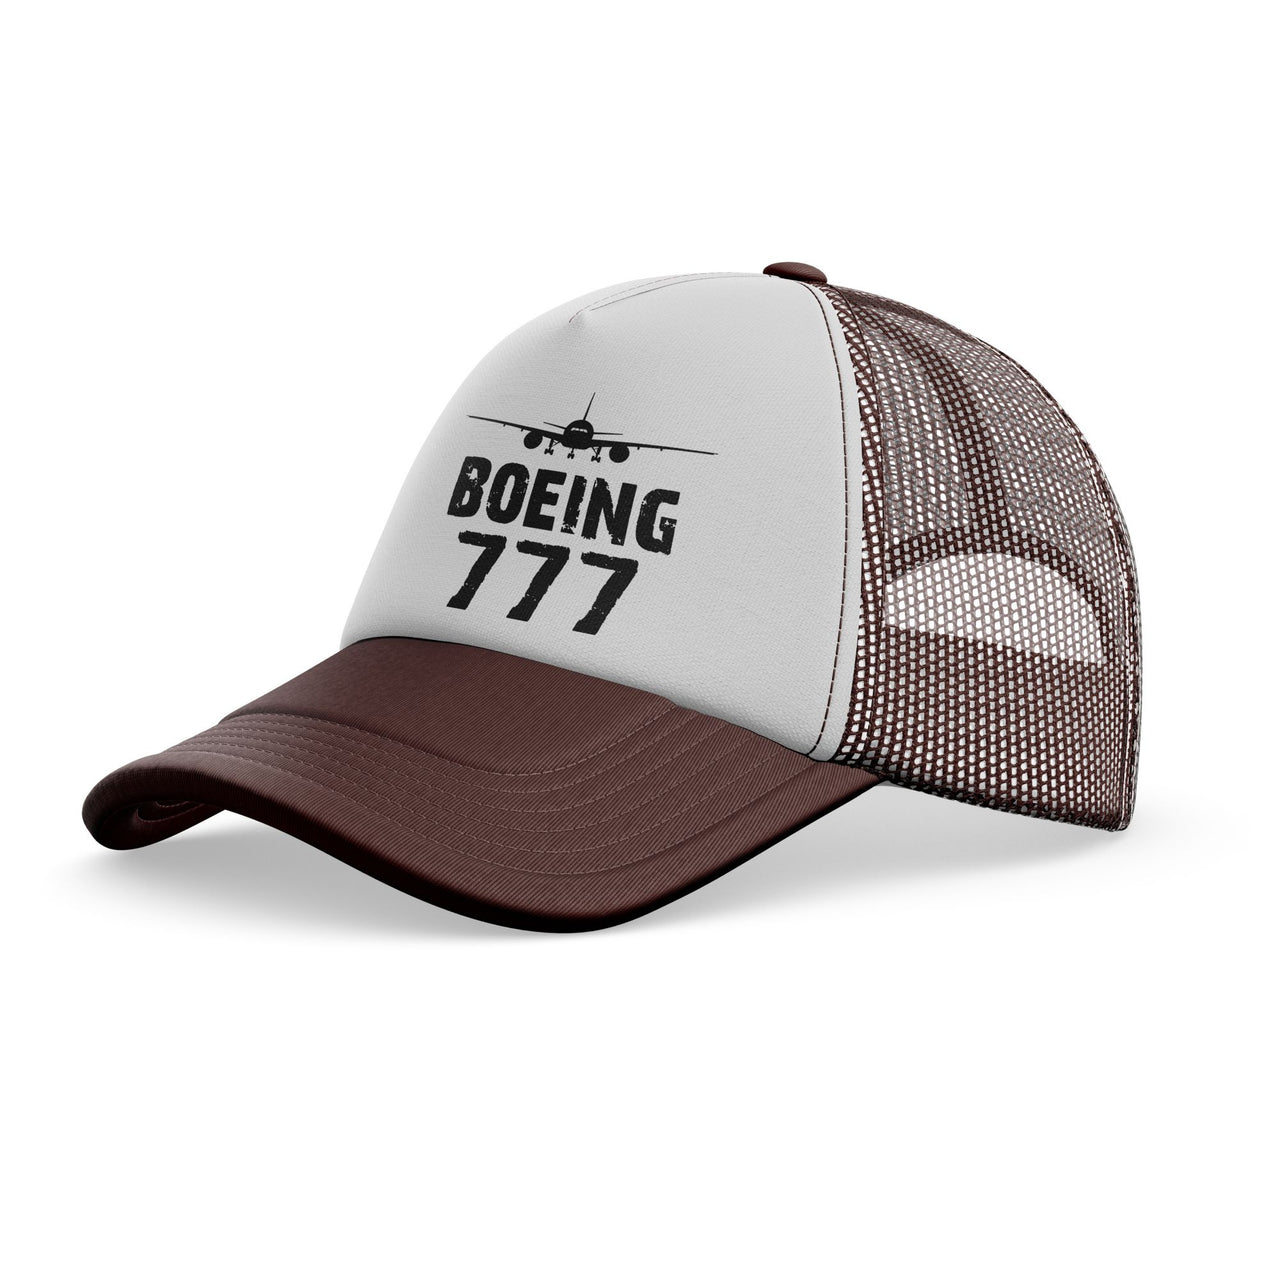 Boeing 777 & Plane Designed Trucker Caps & Hats